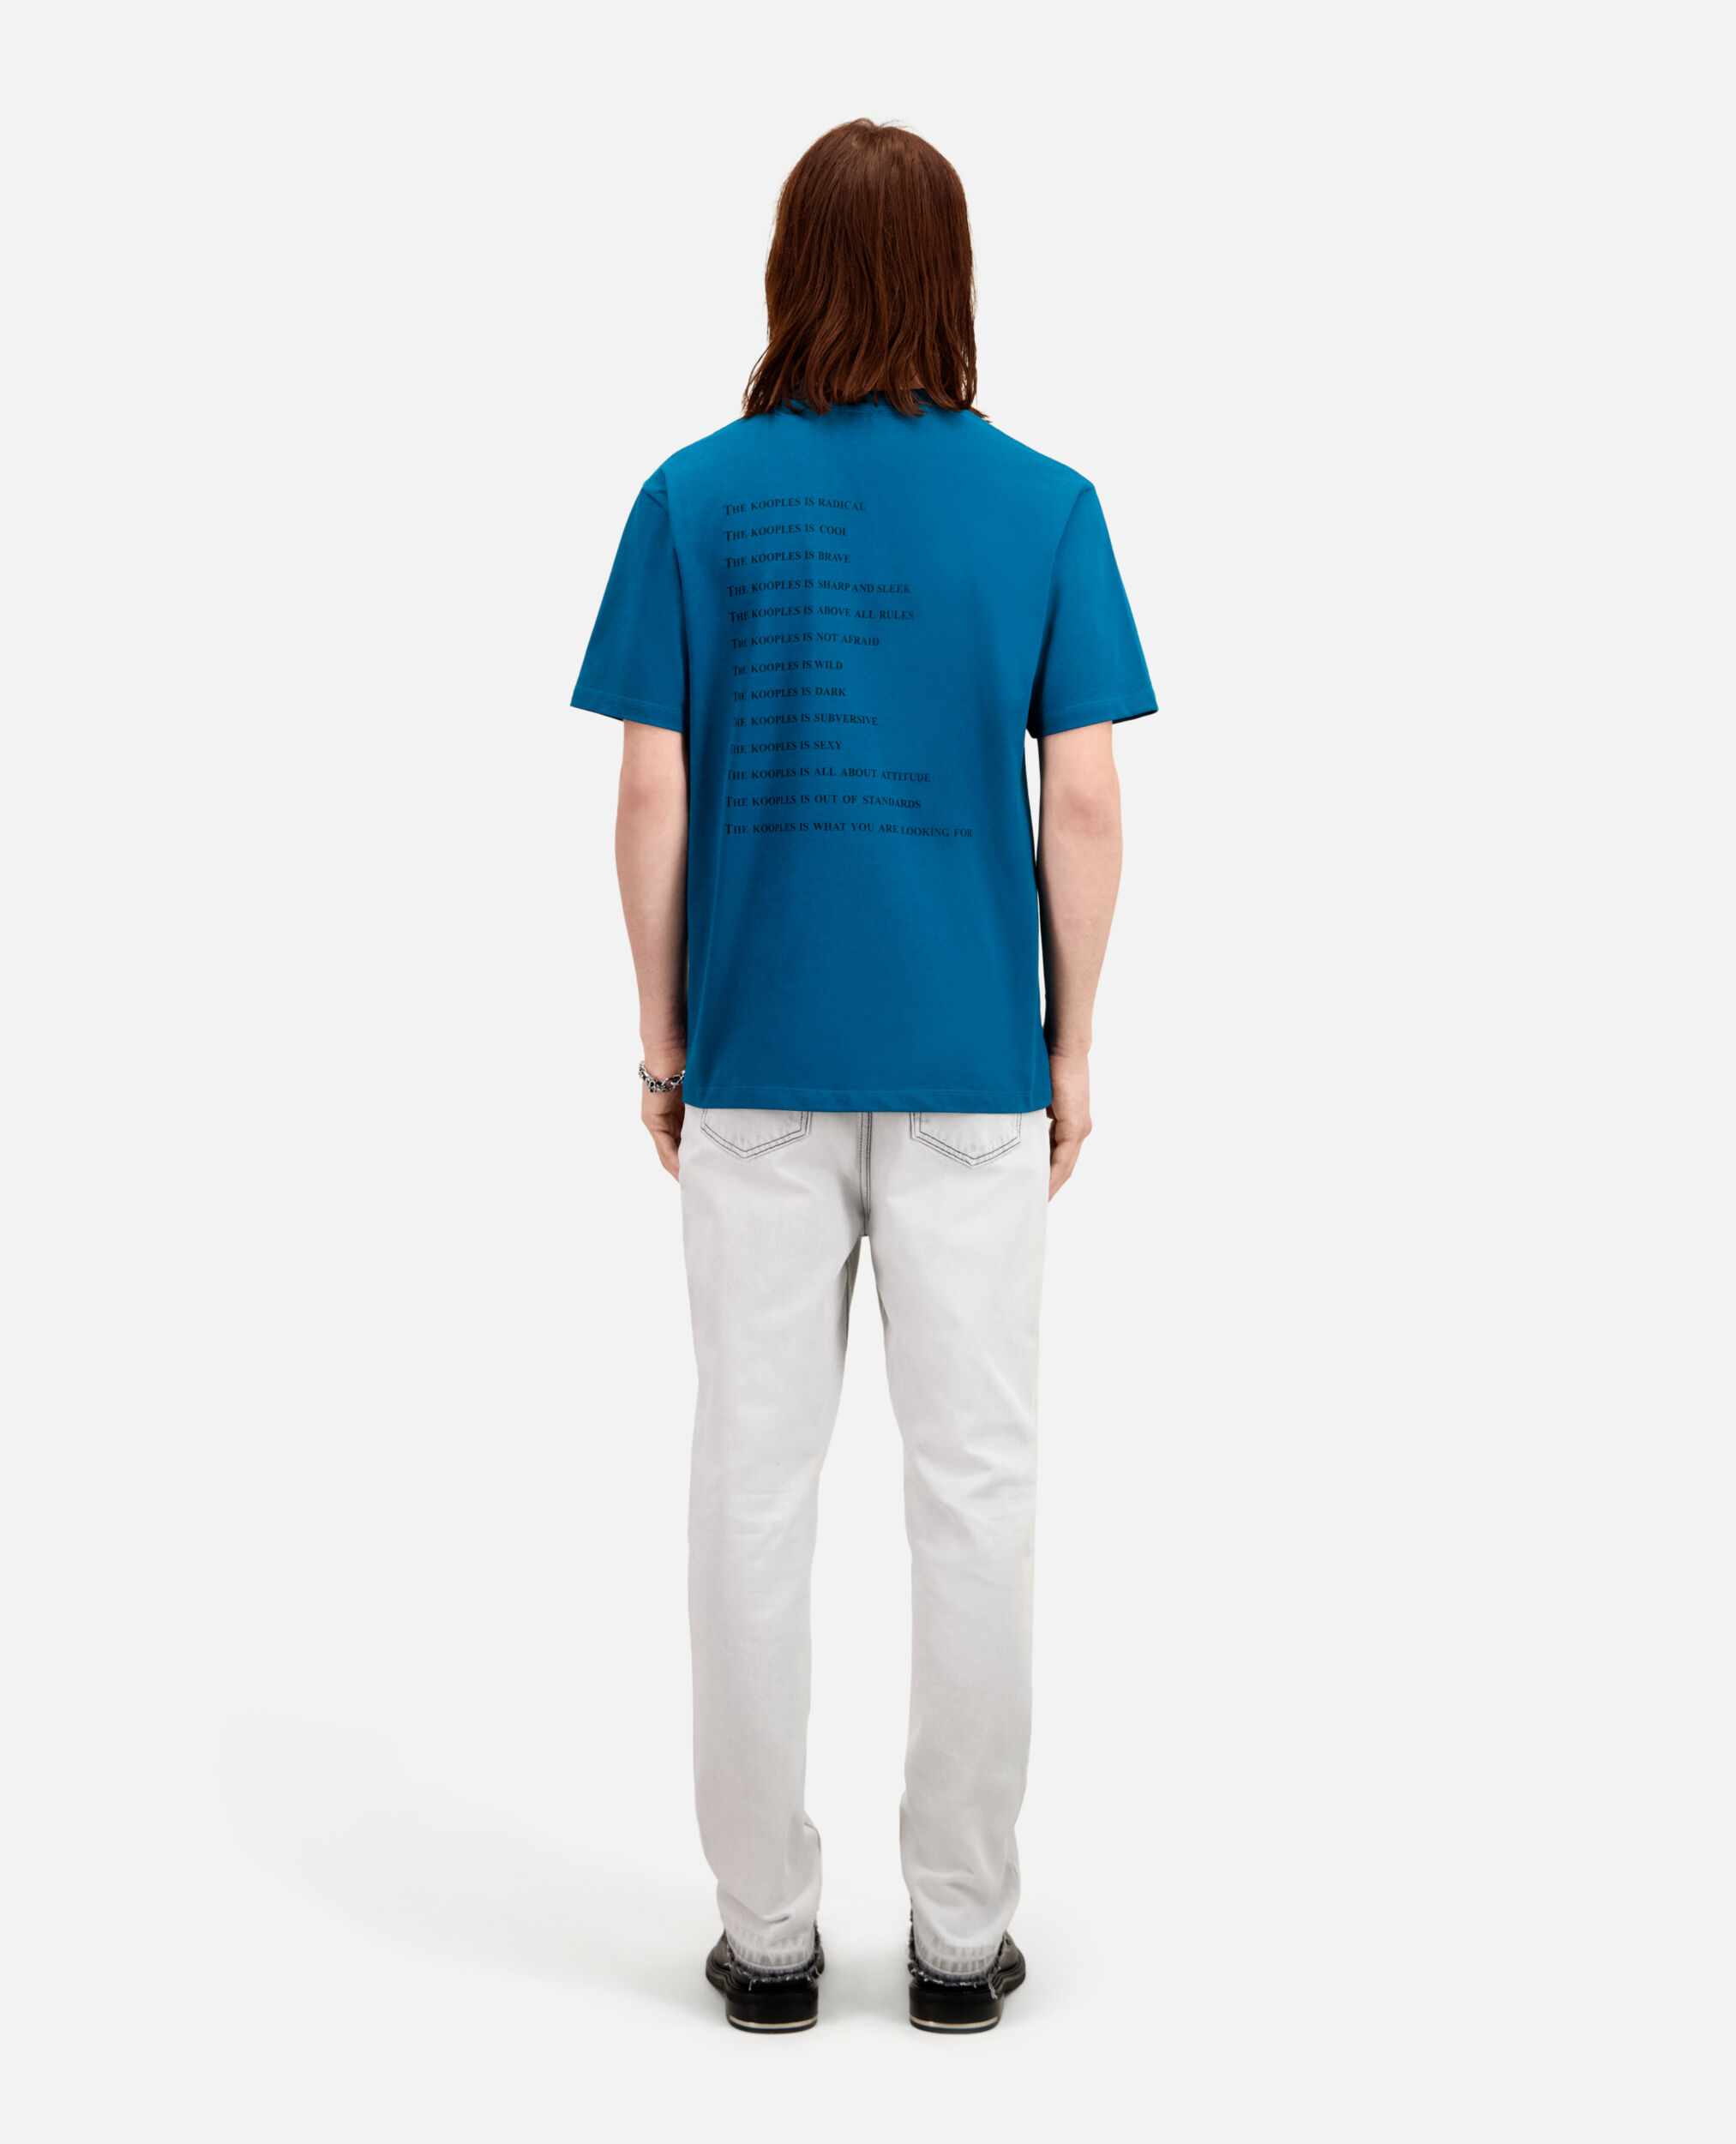 Blaues T-Shirt Herren mit „What is“-Schriftzug, MEDIUM BLUE, hi-res image number null